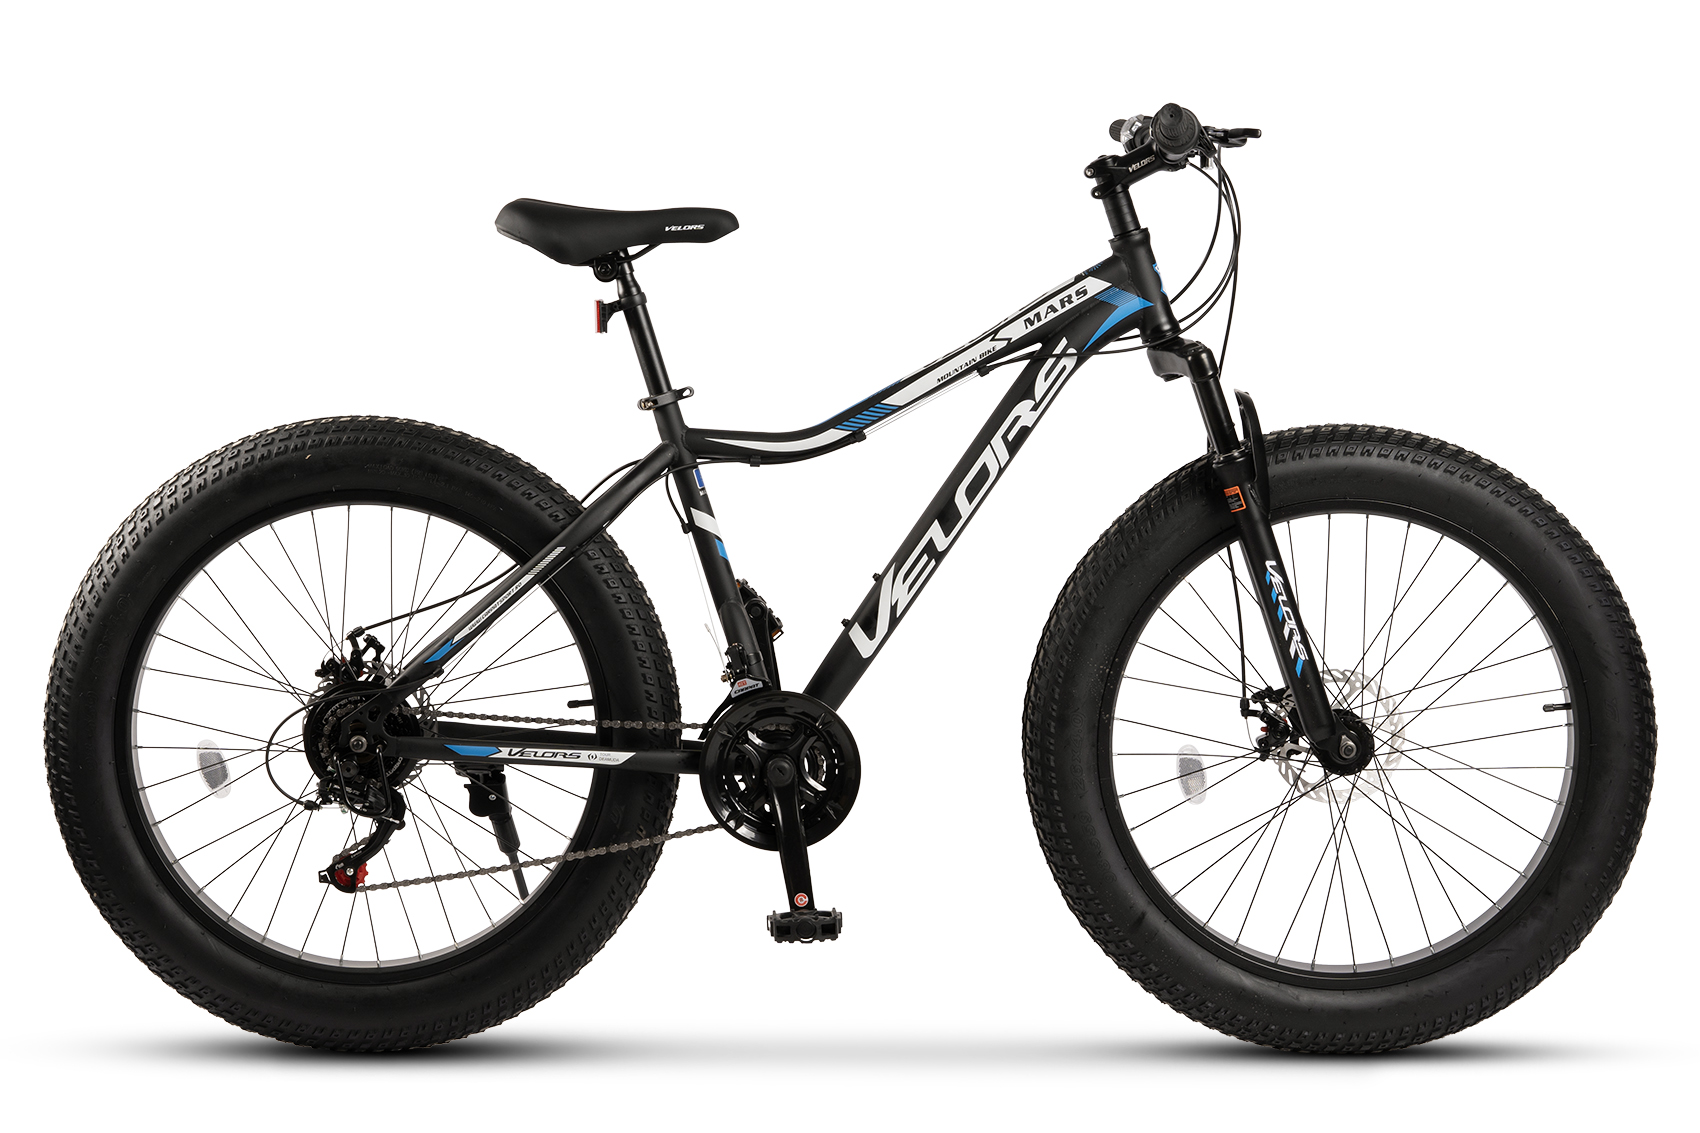 BICICLETE FAT BIKE - Bicicleta Fat-Bike Velors Mars V2605G 26",Negru/Alb/Albastru, https:carpatsport.ro